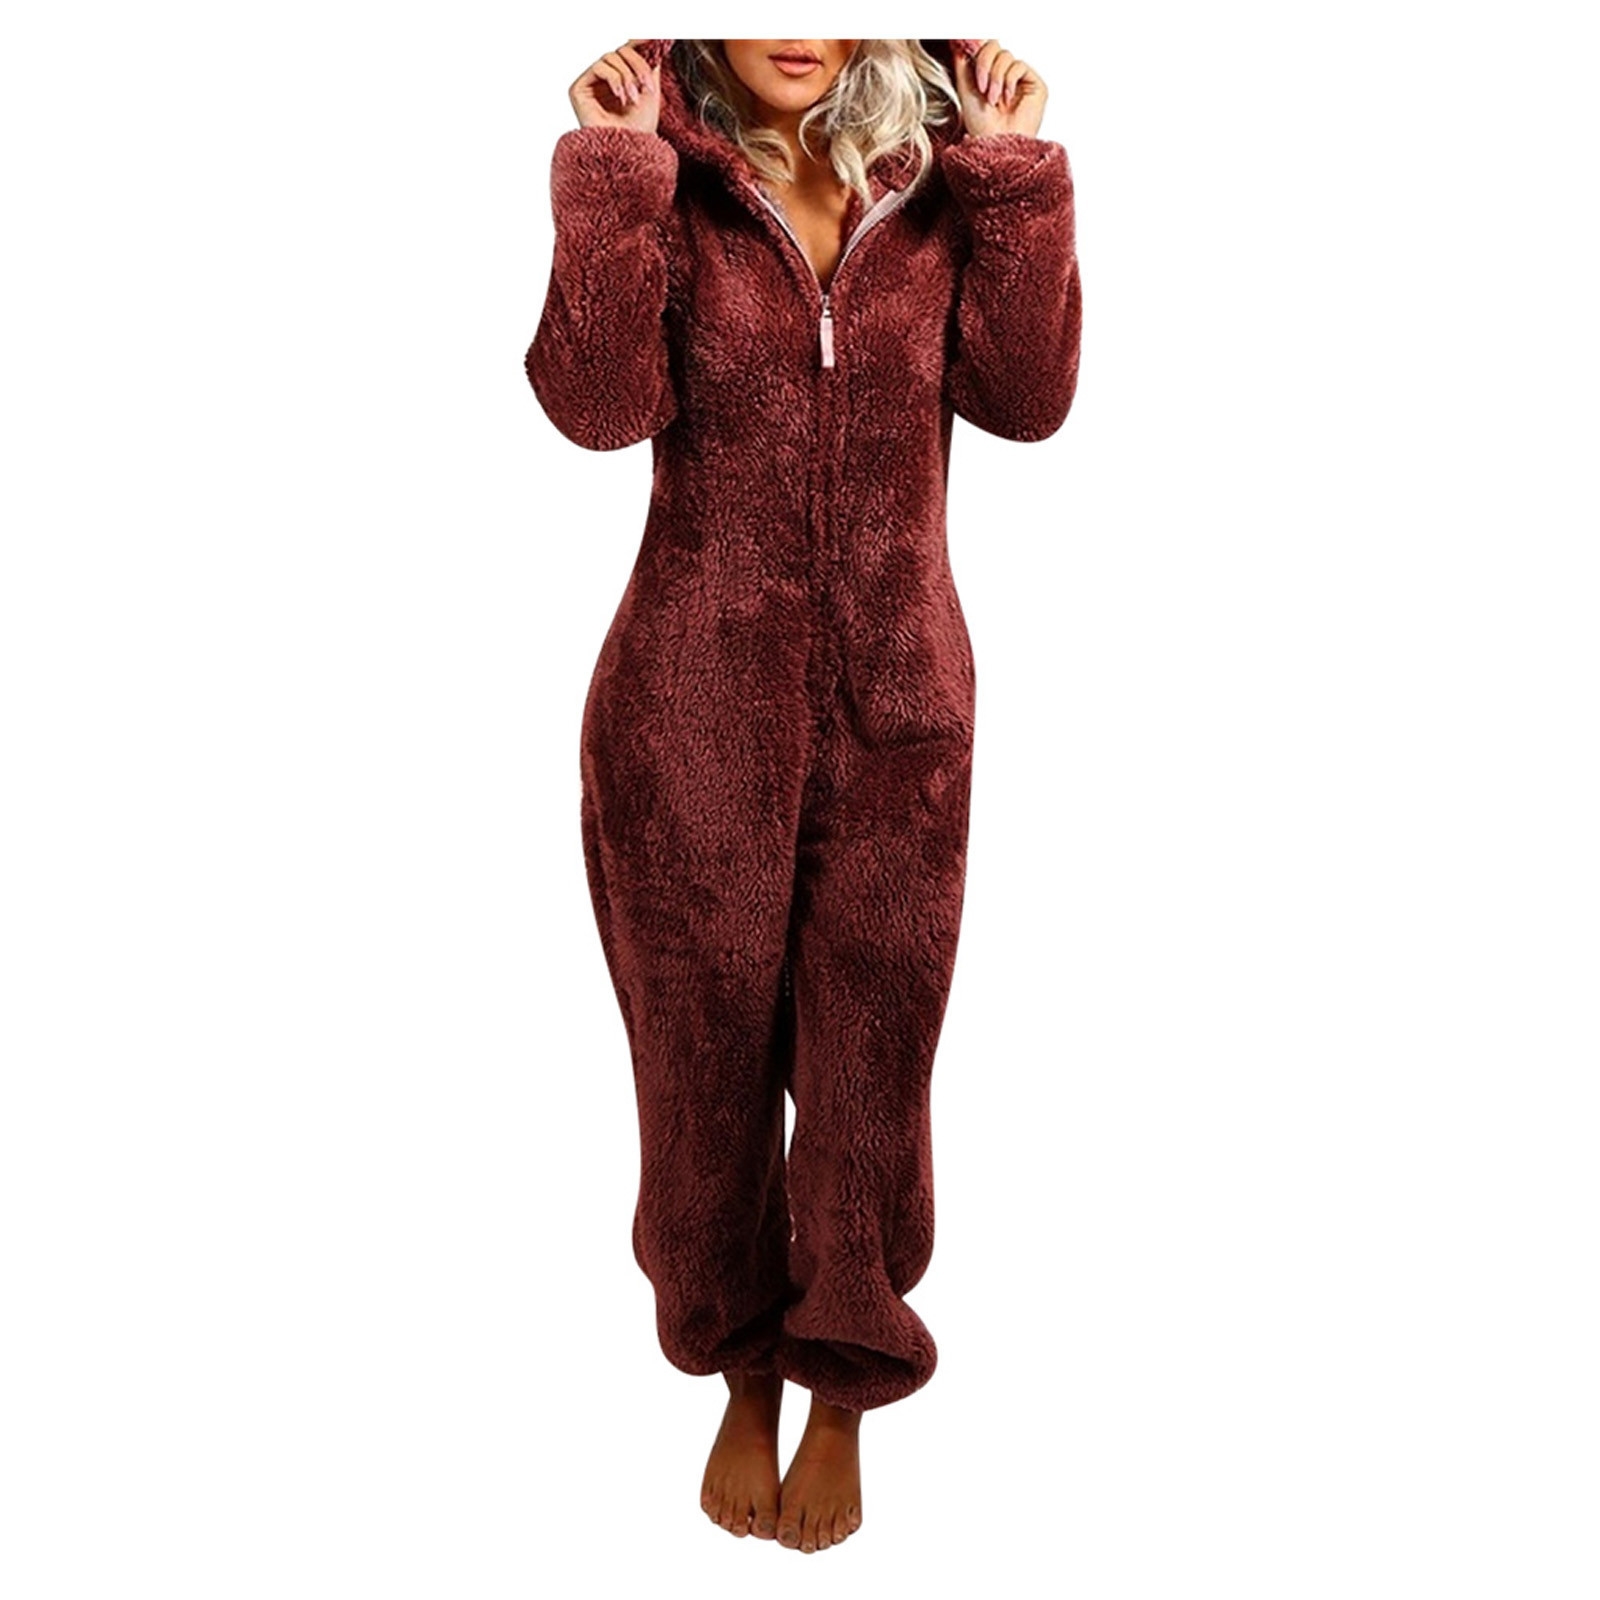 Oxodoi Sales Clearance Women's Plus Size Fleece Pyjamas,Fluffy